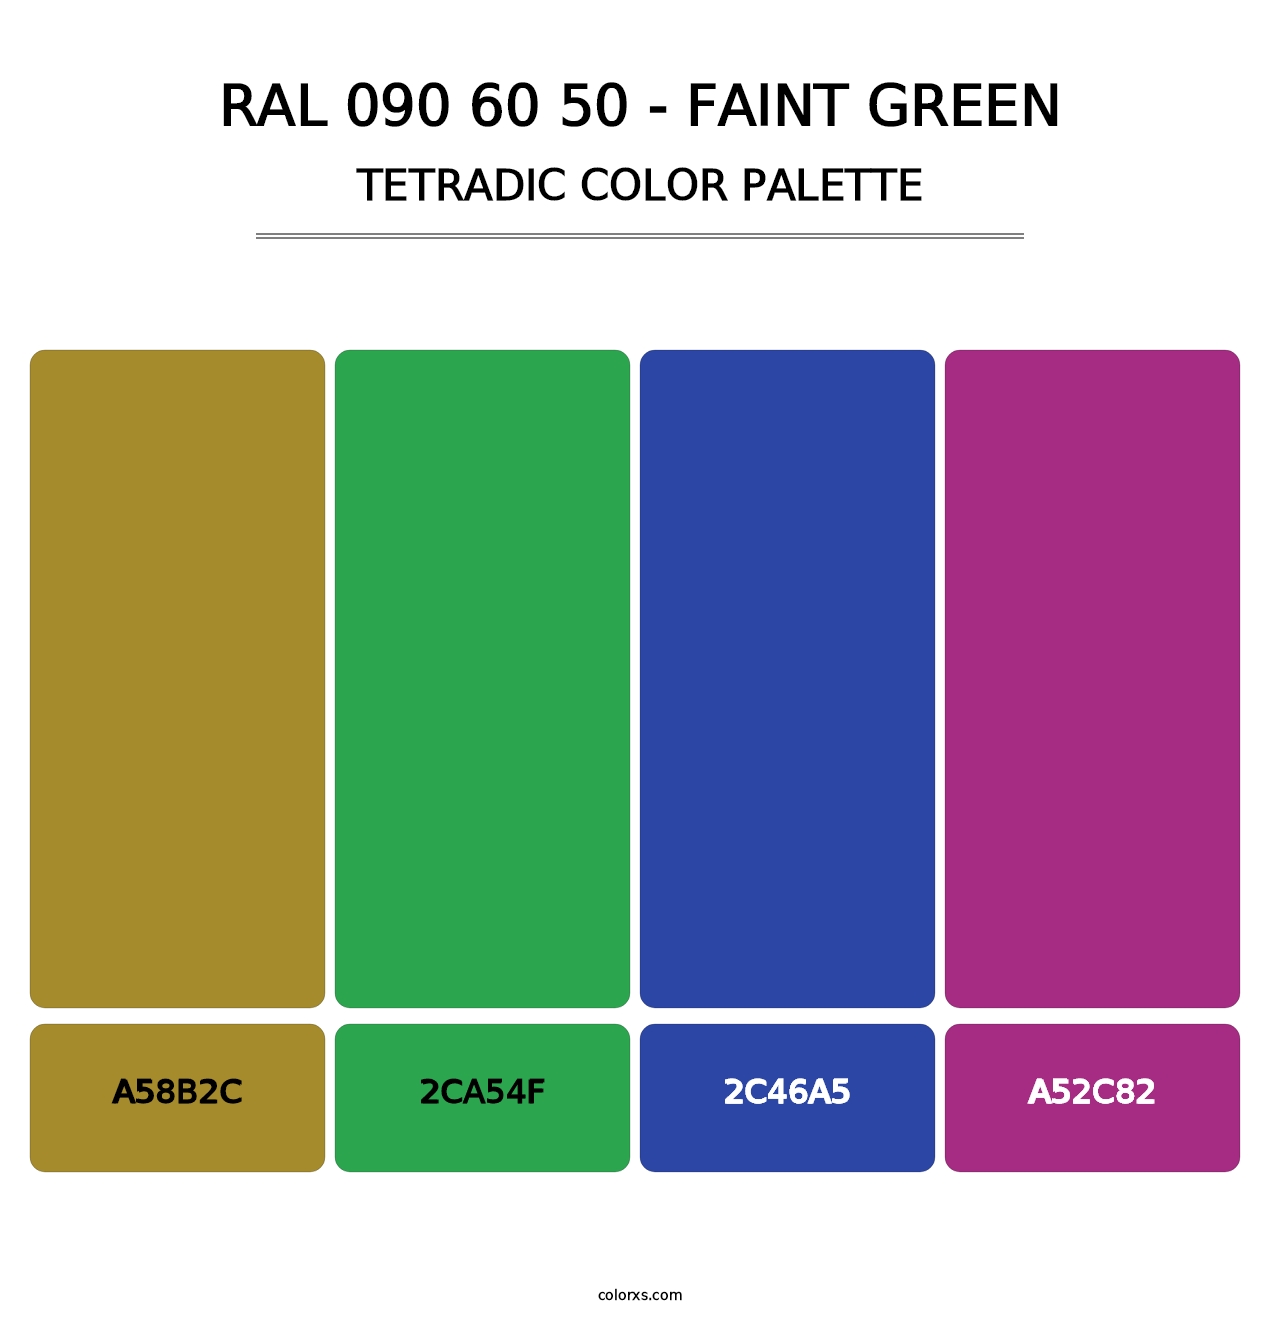 RAL 090 60 50 - Faint Green - Tetradic Color Palette